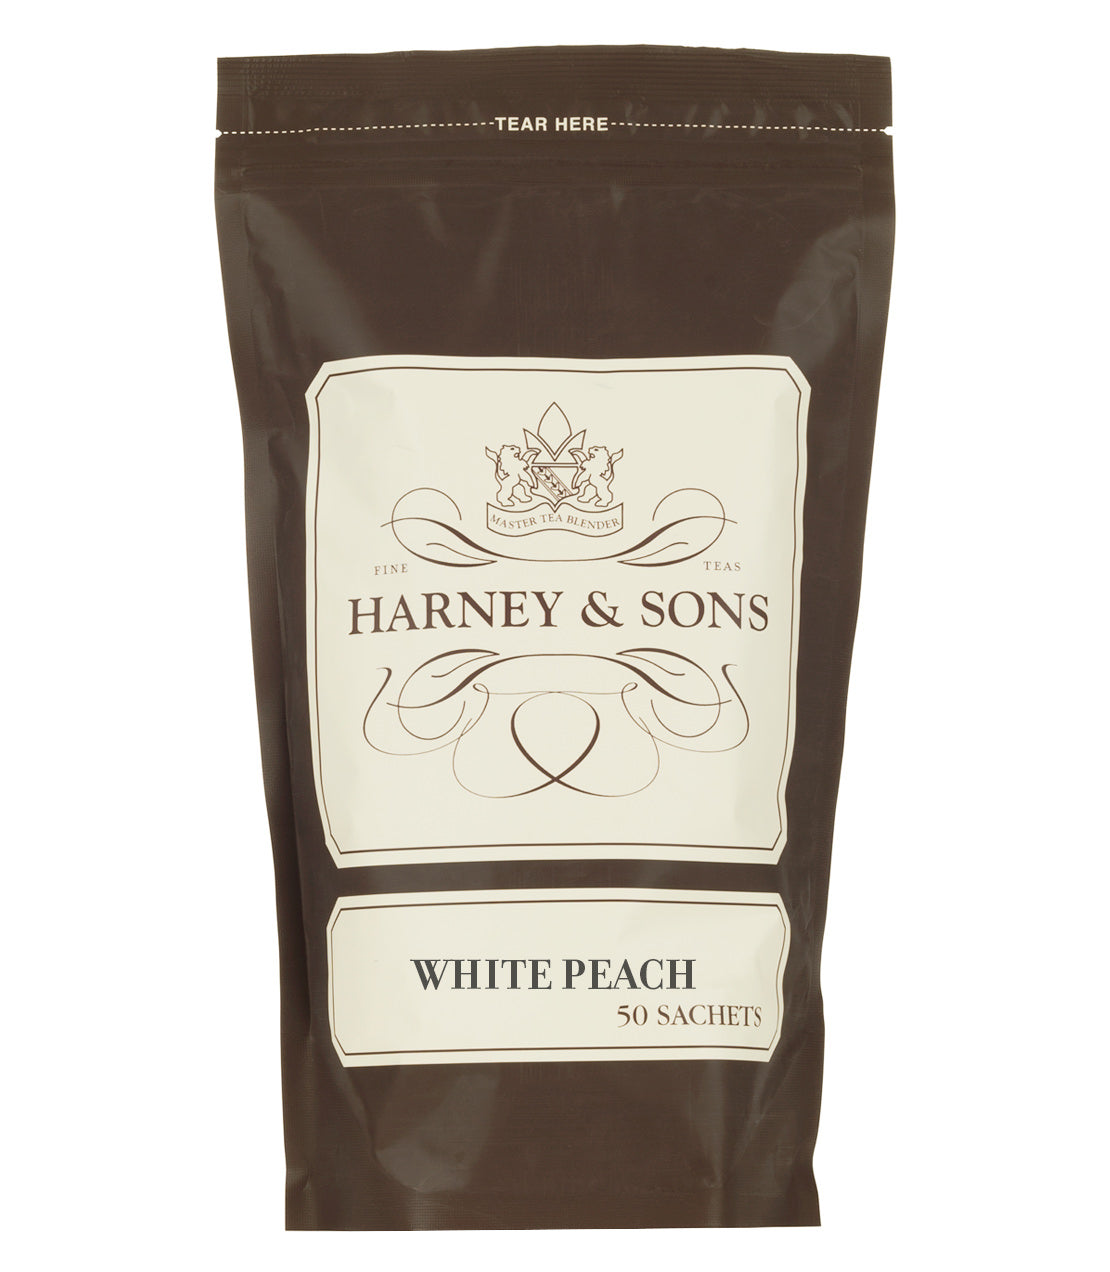 White Peach - Sachets Bag of 50 Sachets - Harney & Sons Fine Teas